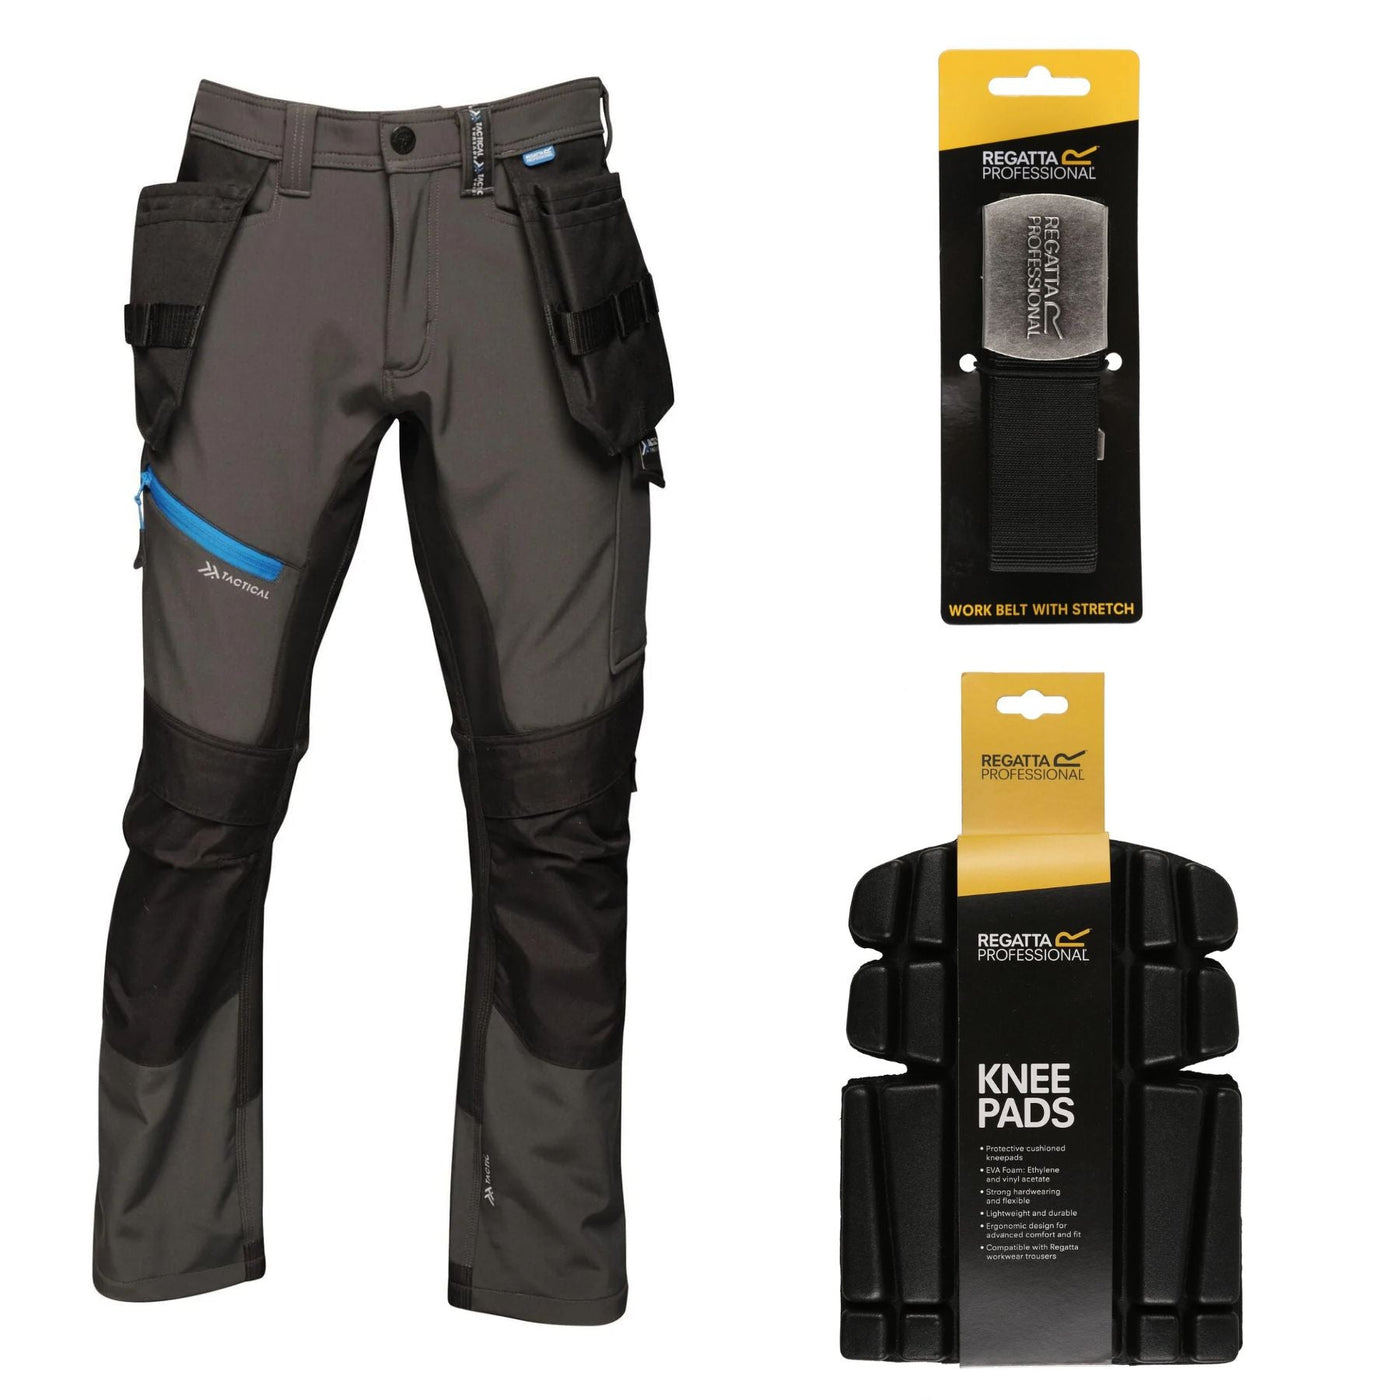 Regatta Professional Special Offer Pack - Mens Strategic Softshell Work Trousers + Belt + Knee Pads